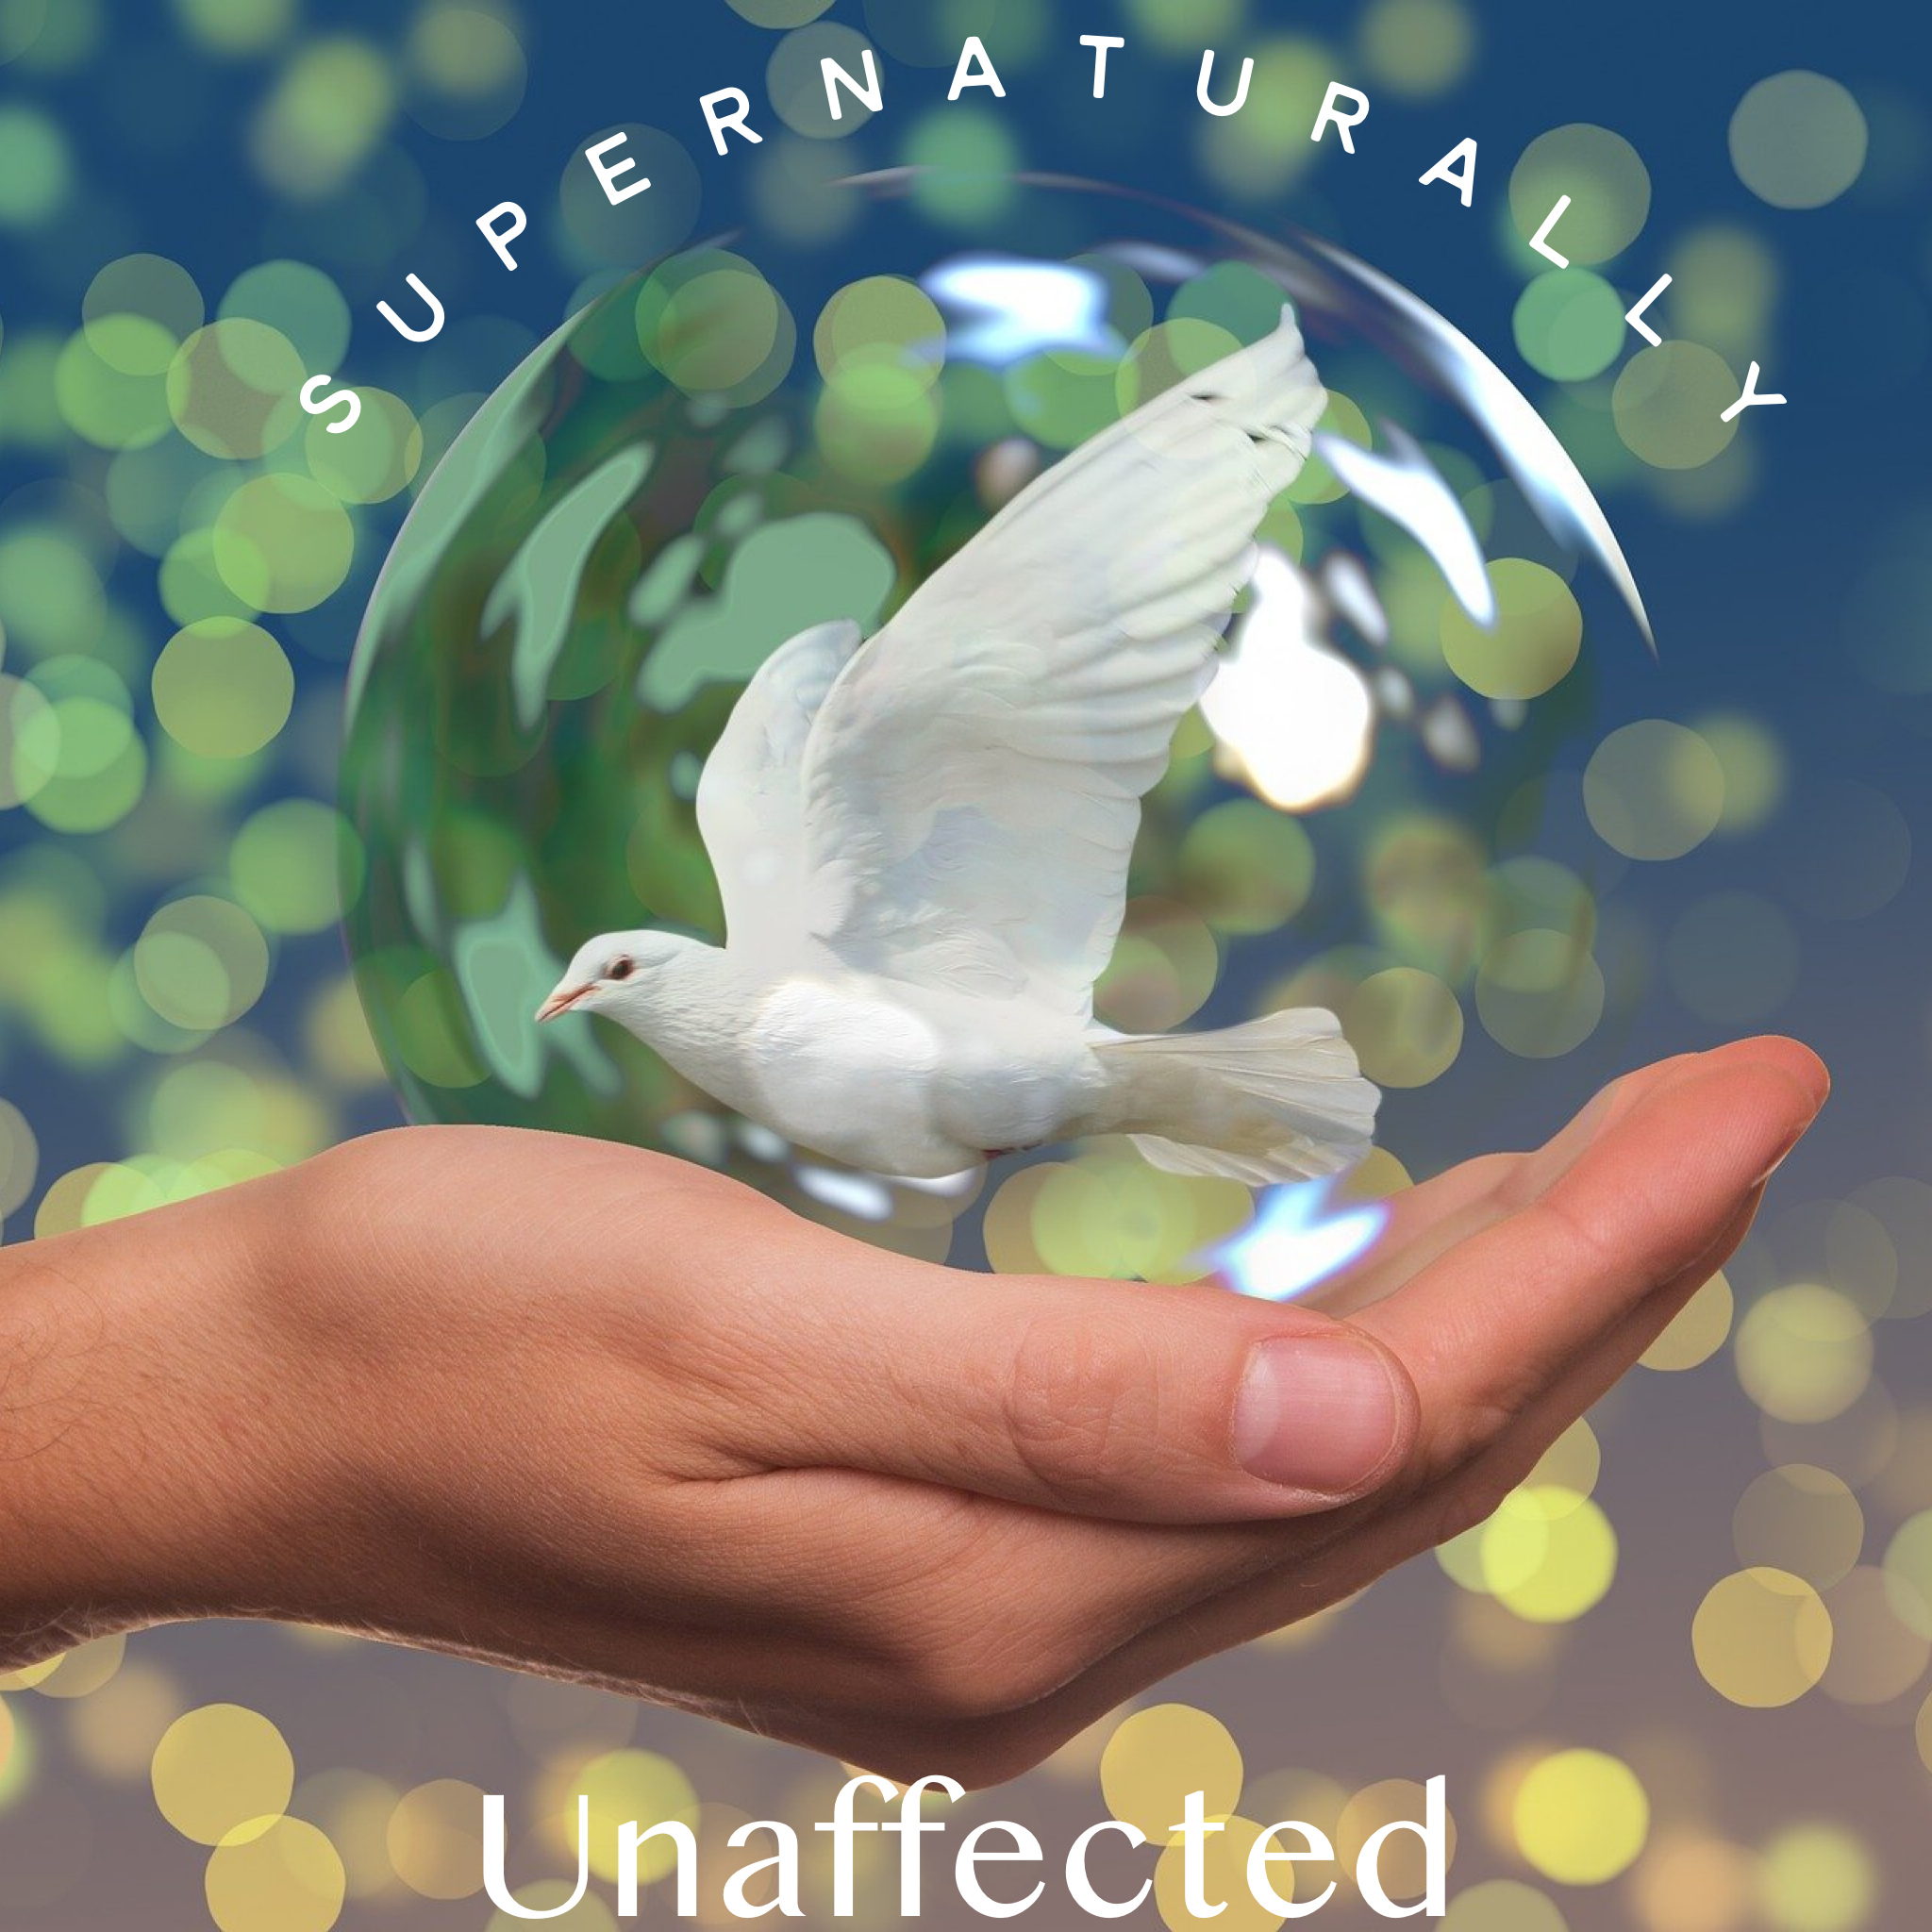 Supernaturally Unaffected - 10/11/20